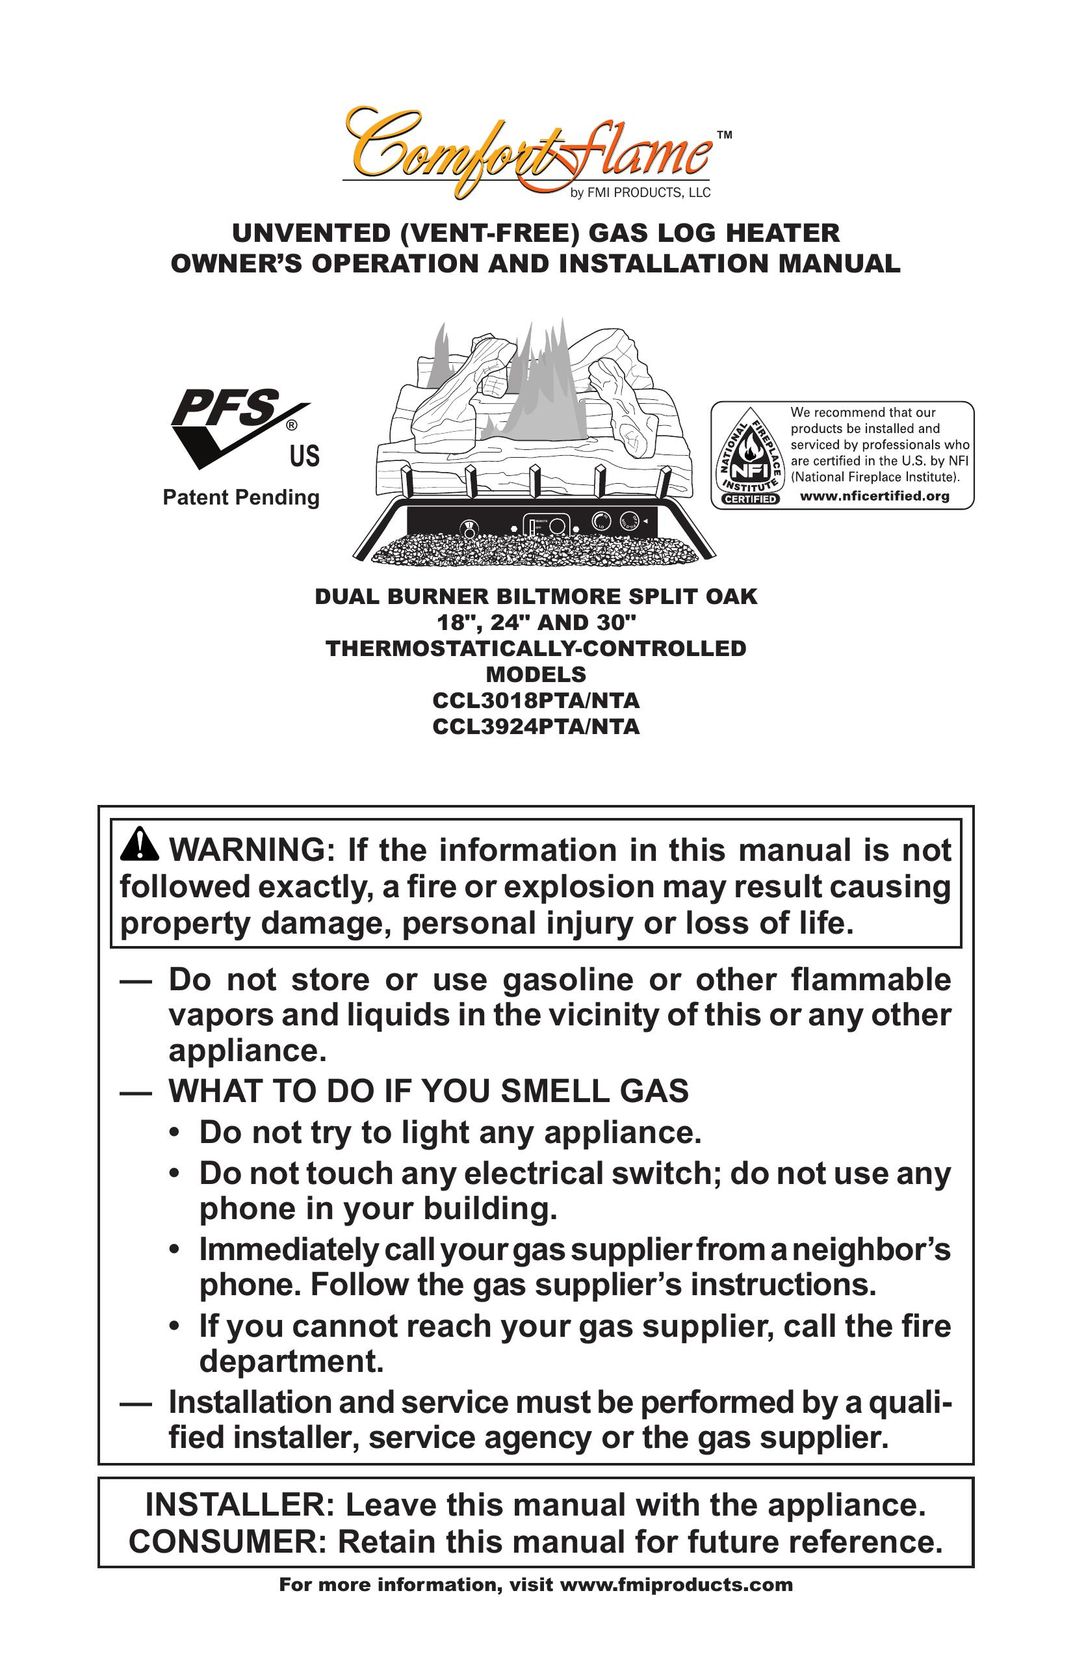 FMI CCL3018PTA/NTA Gas Heater User Manual